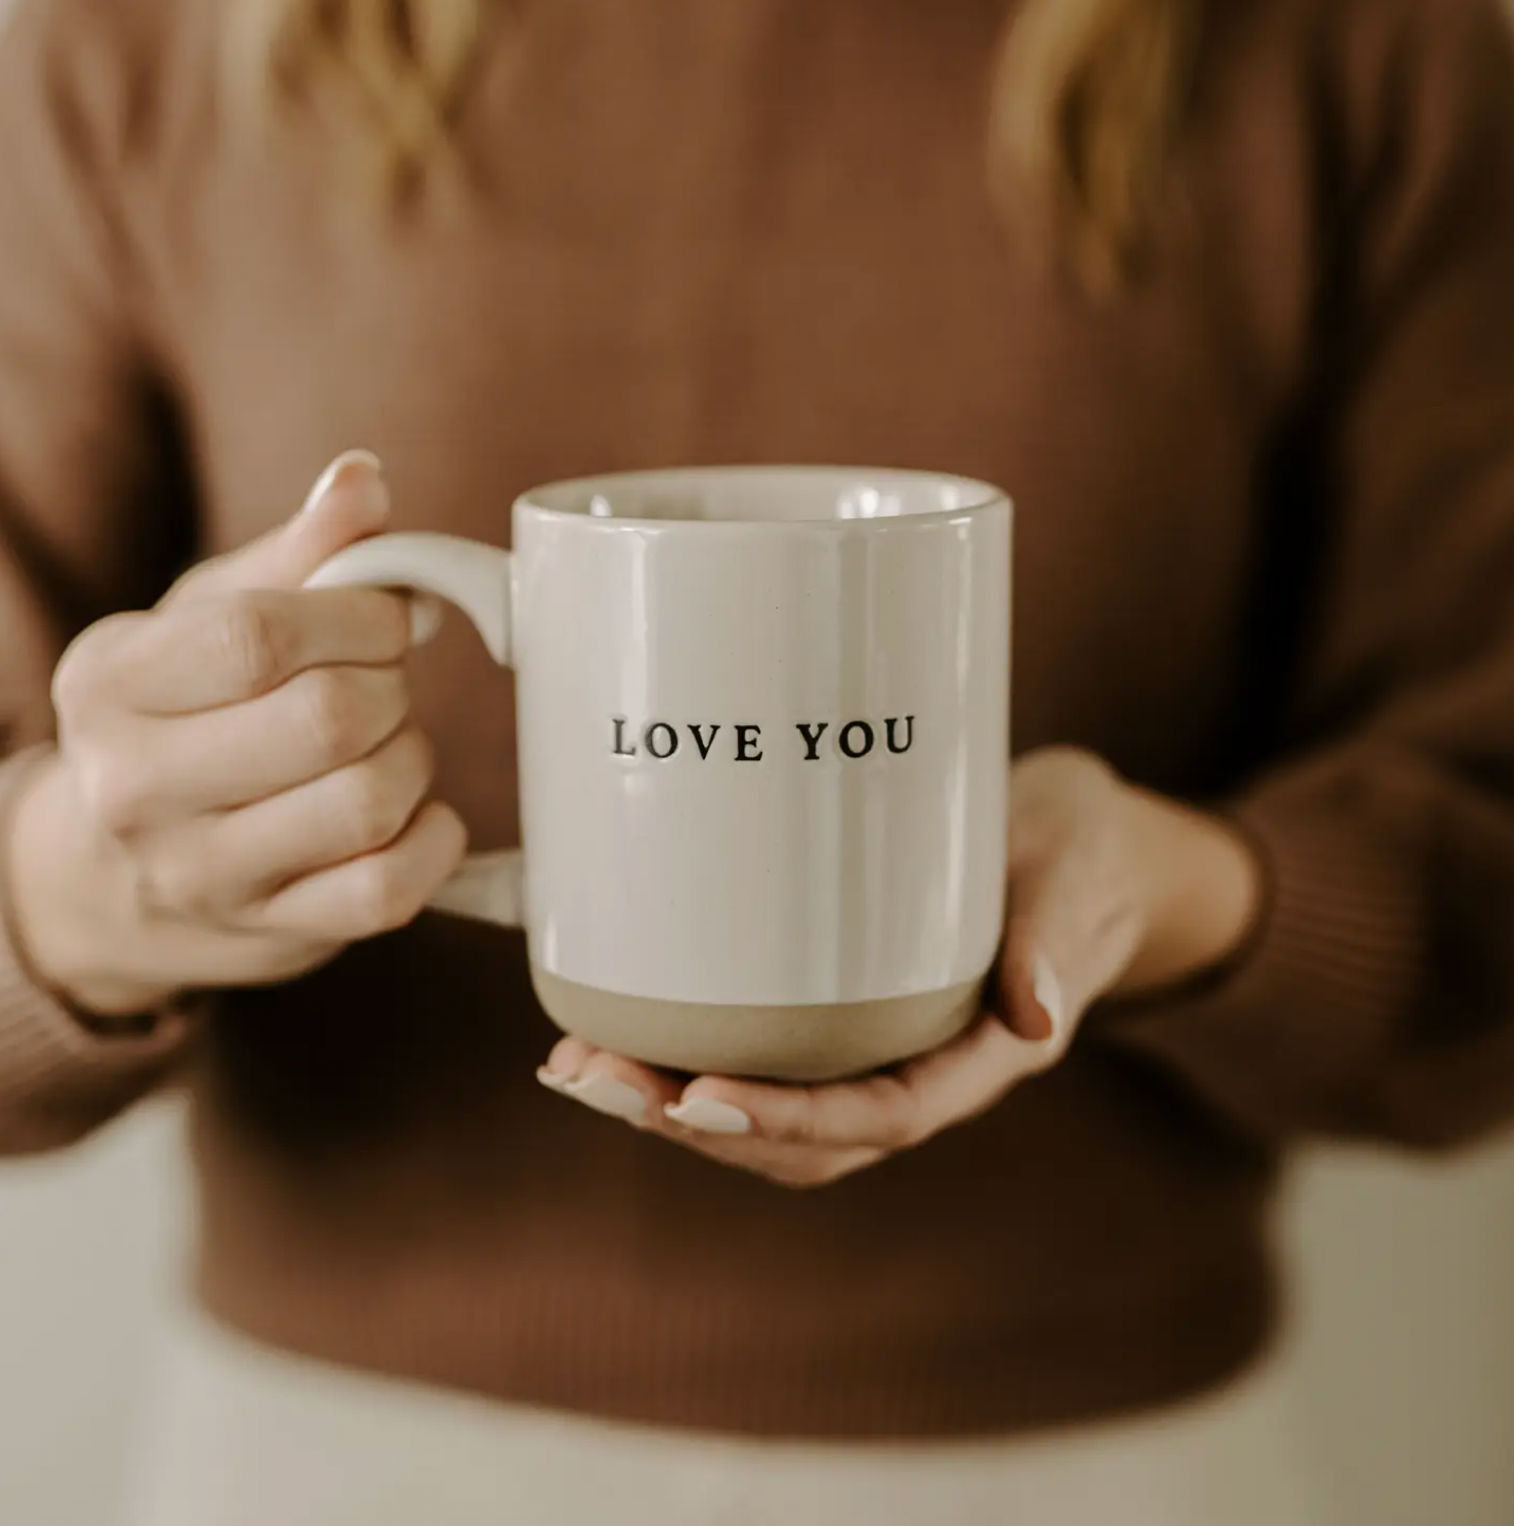 Love You - Cream Stoneware Coffee Mug